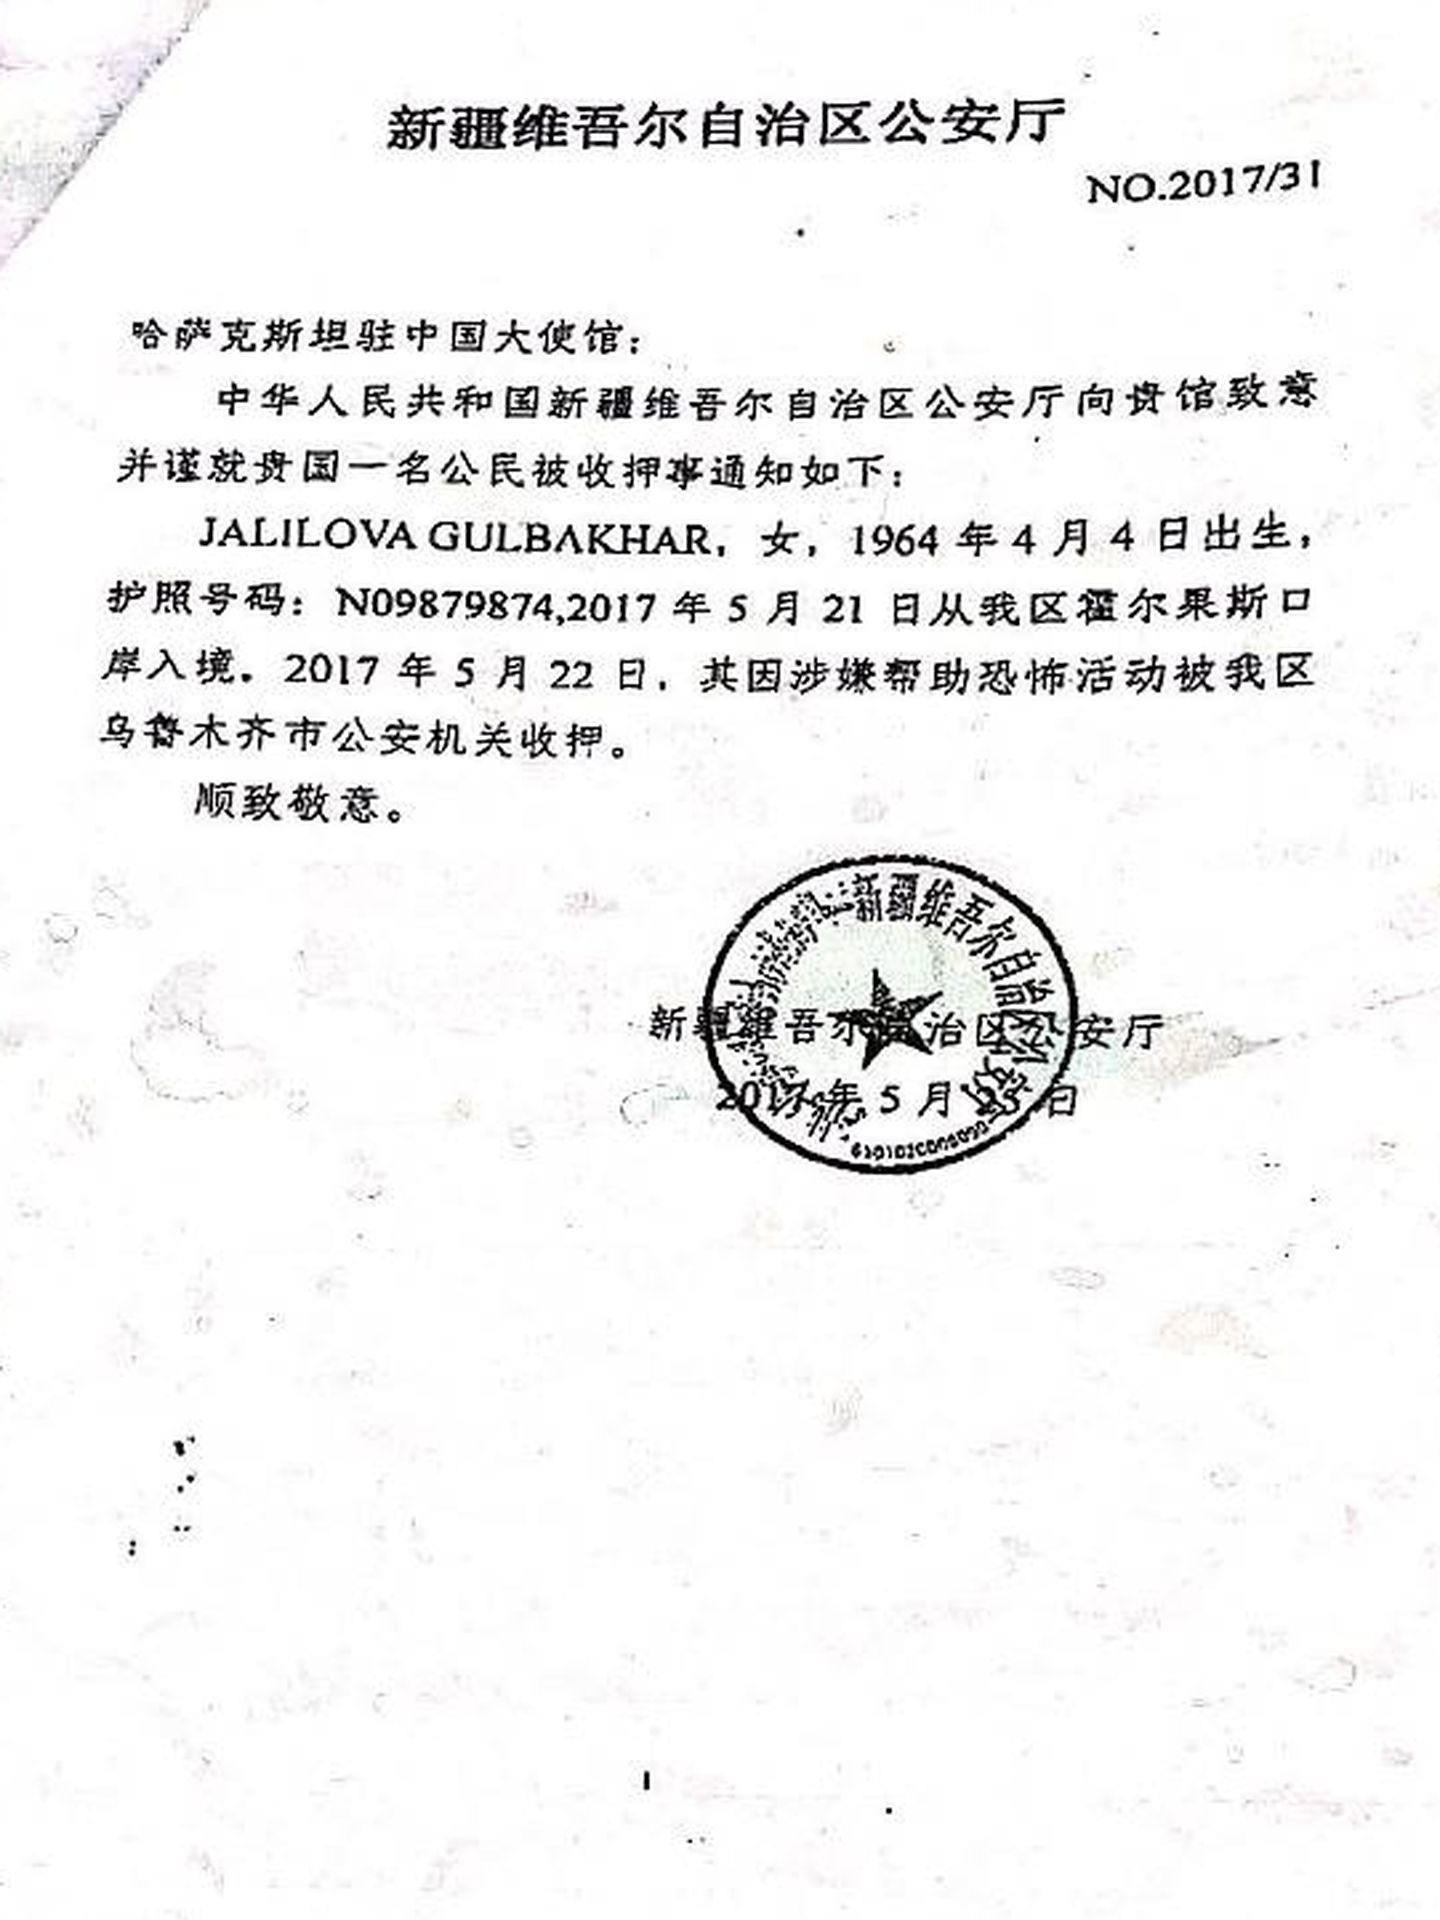 Documento en el Gobierno chino acusa a Gulbakhar Jalilova de terrorismo